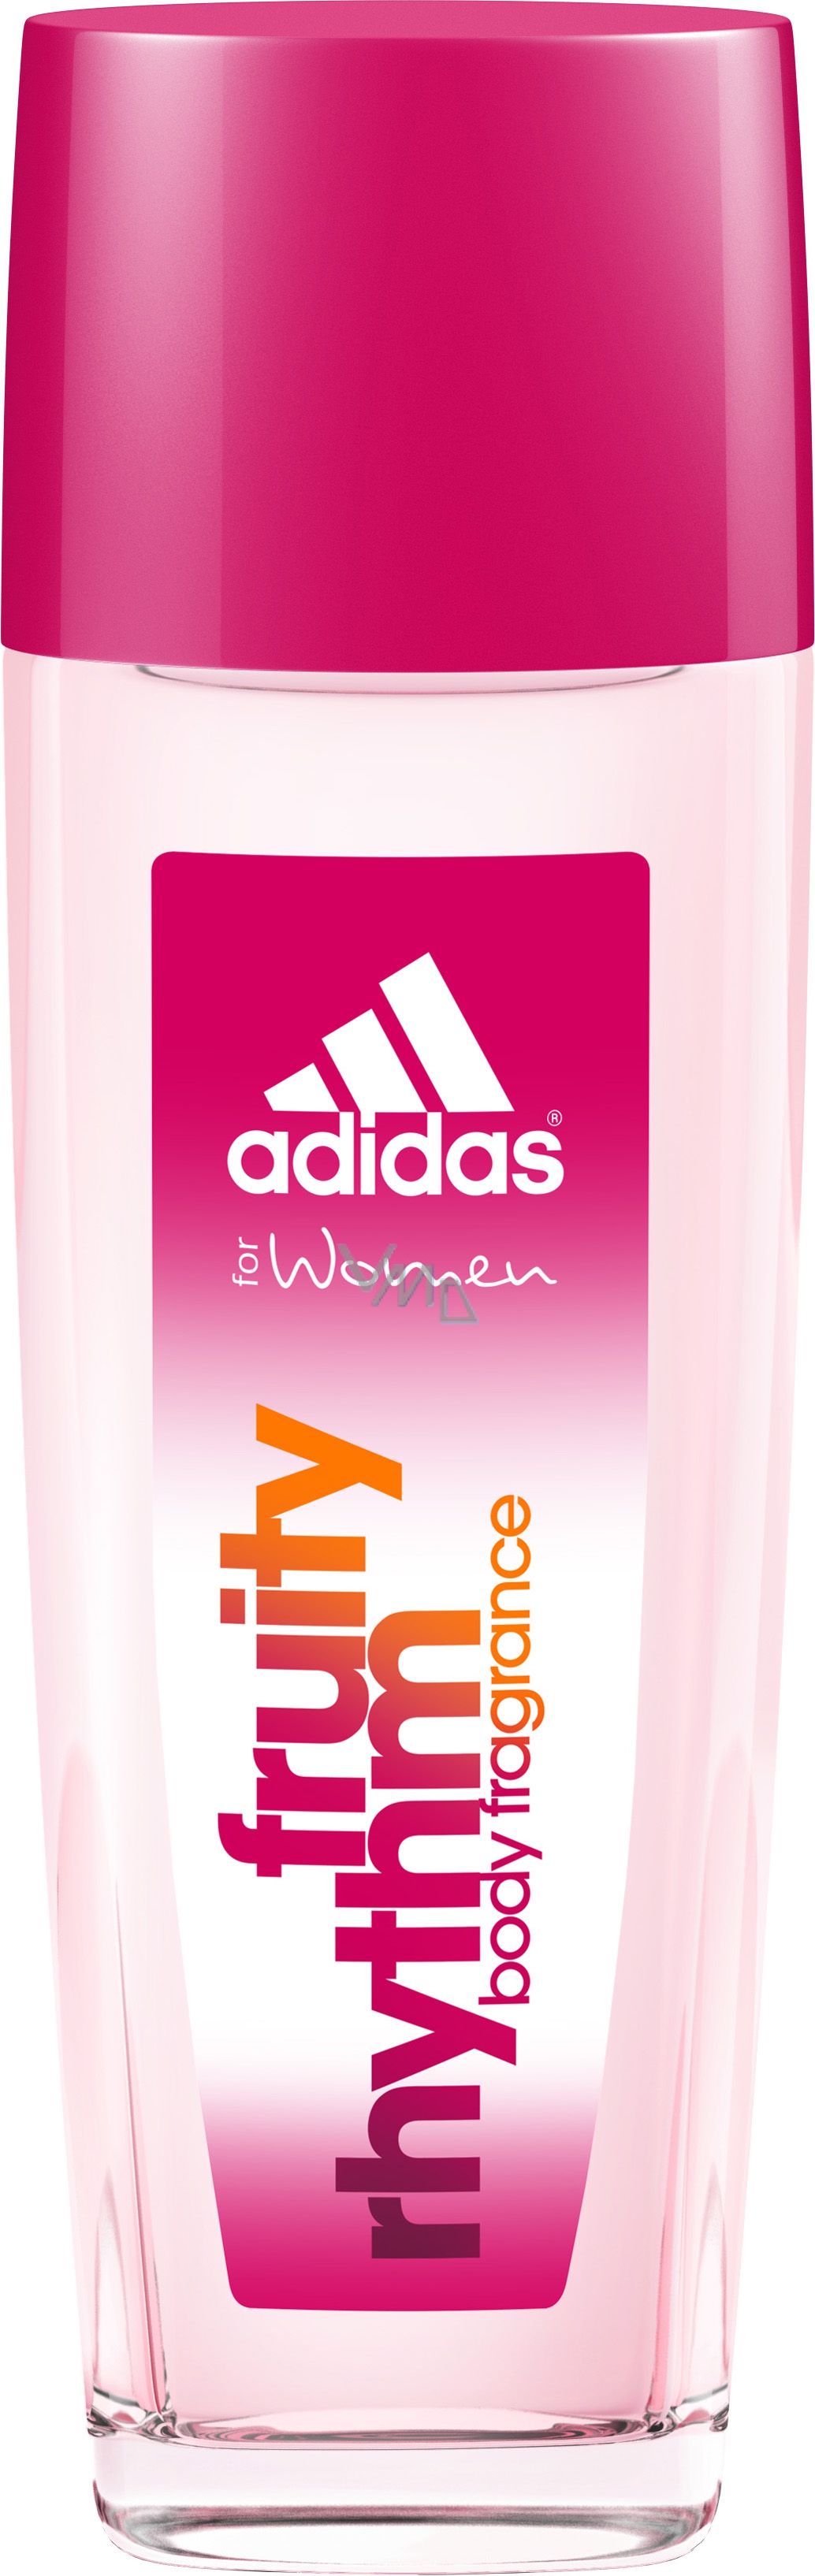 warm Overcome drunk Adidas Fruity Rhythm perfumed deodorant glass for women 75 ml - VMD  parfumerie - drogerie